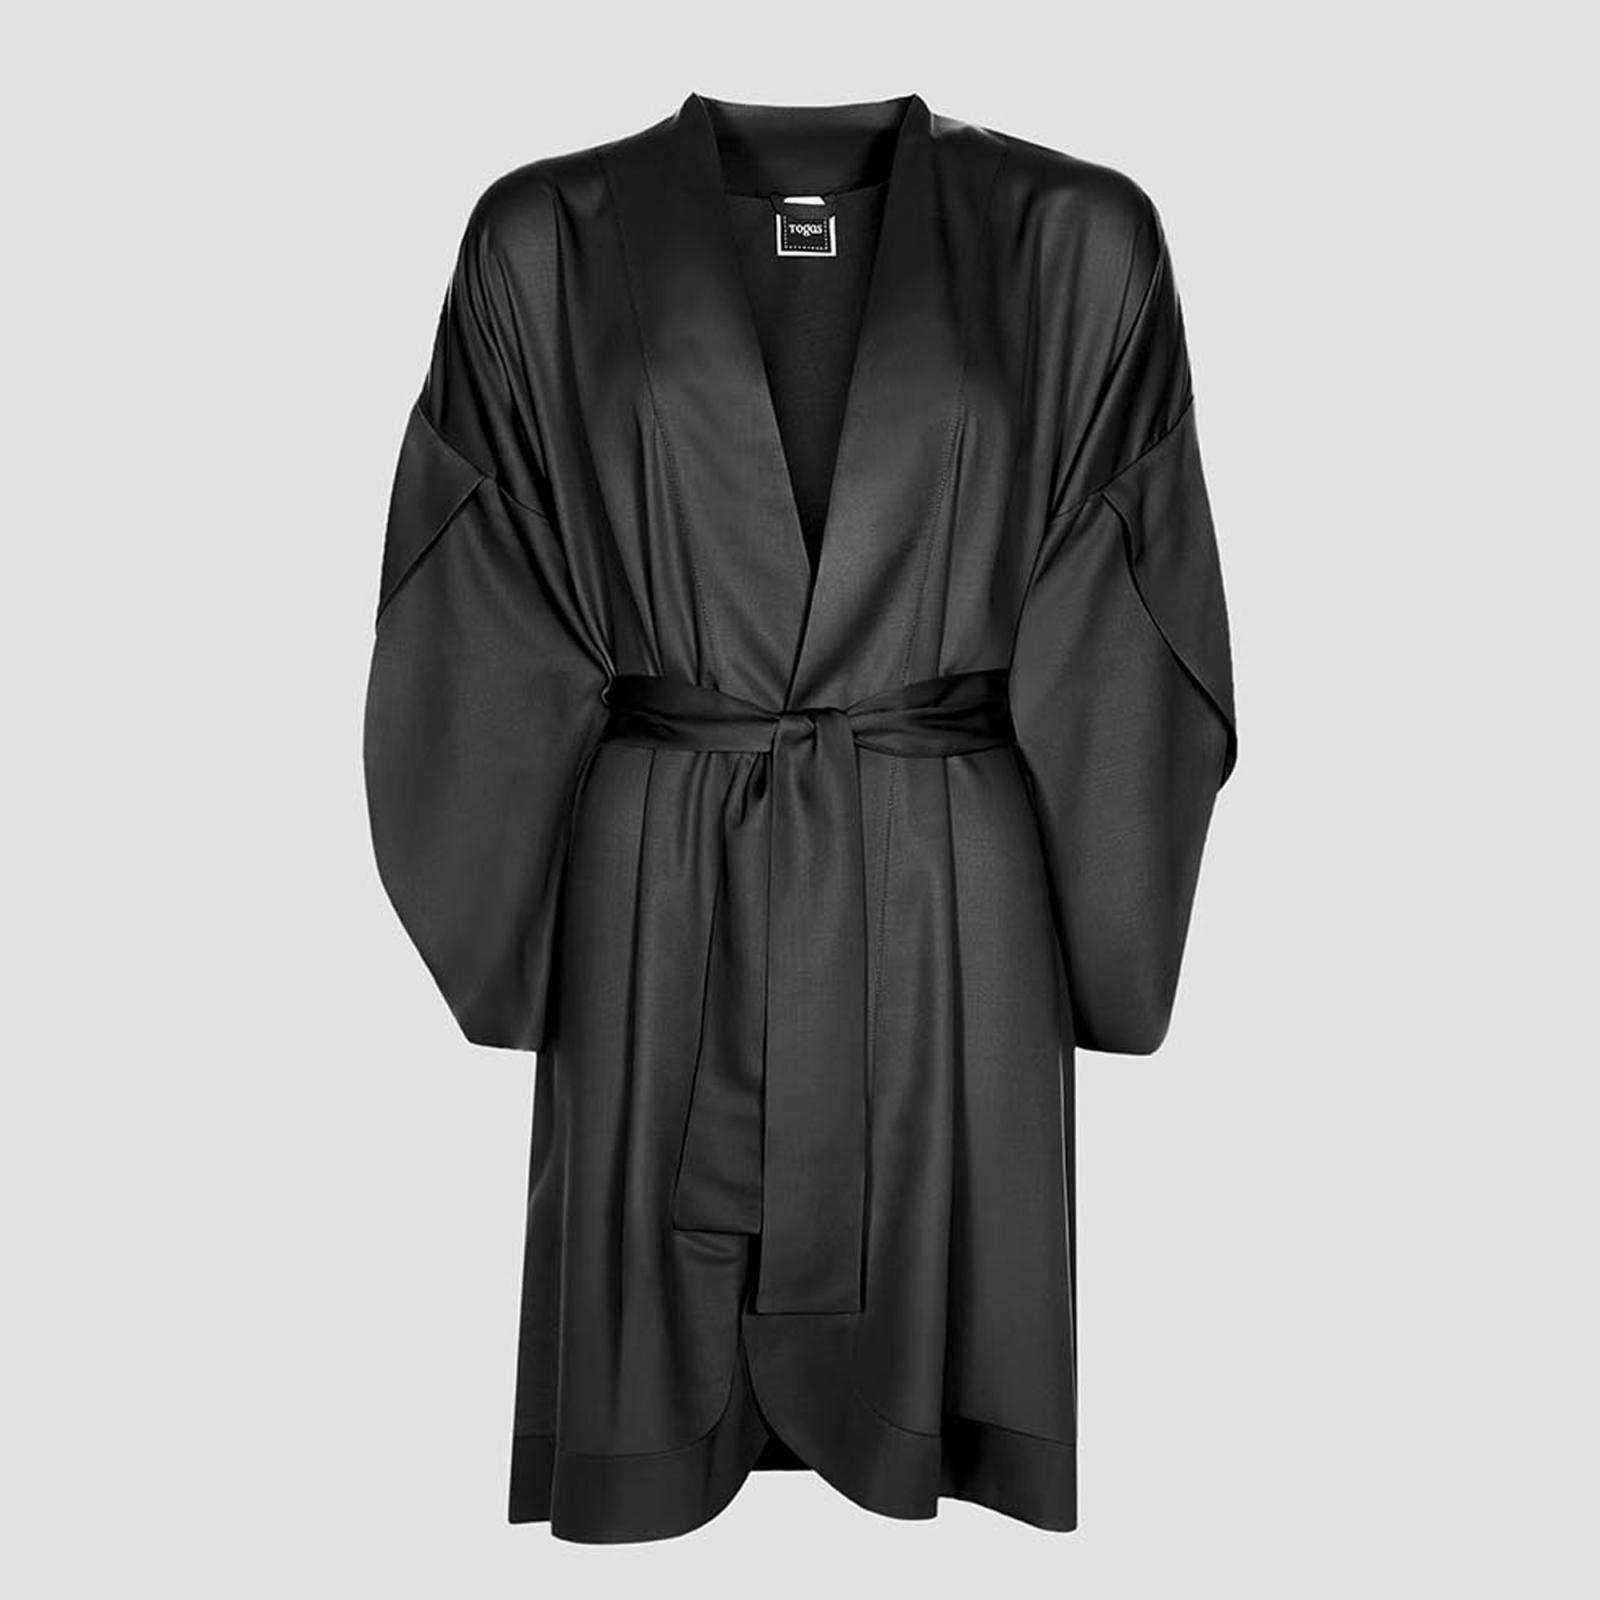 Халат-кимоно короткое Togas Наоми чёрное XS (42) халат кимоно короткое togas наоми чёрное м 46